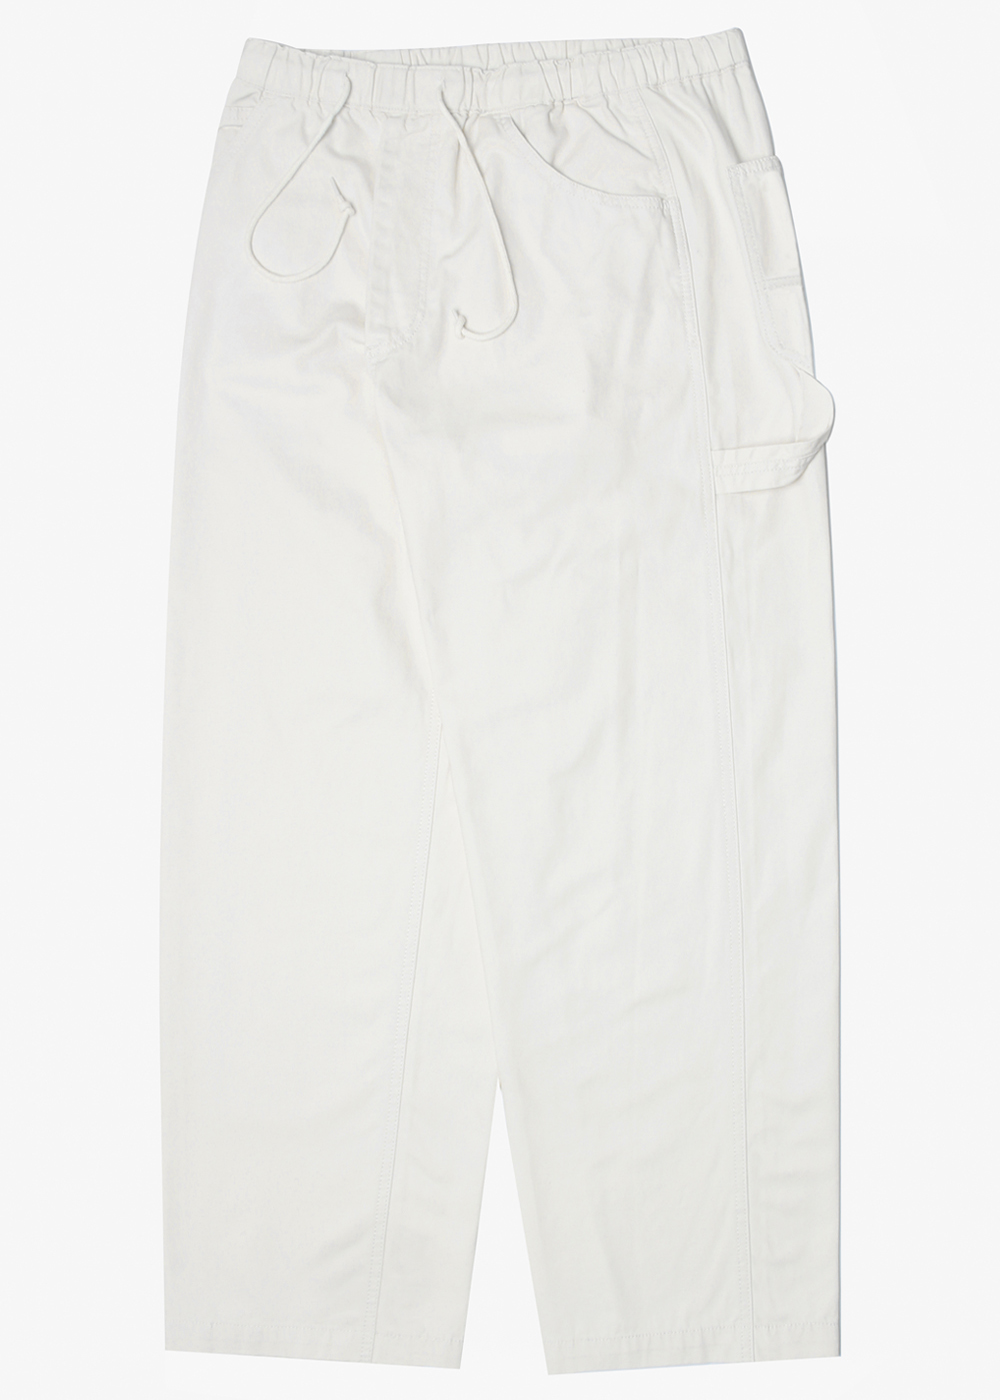 COEN BY UNITED ARROWS’wide fit fit’cotton carpenter pants